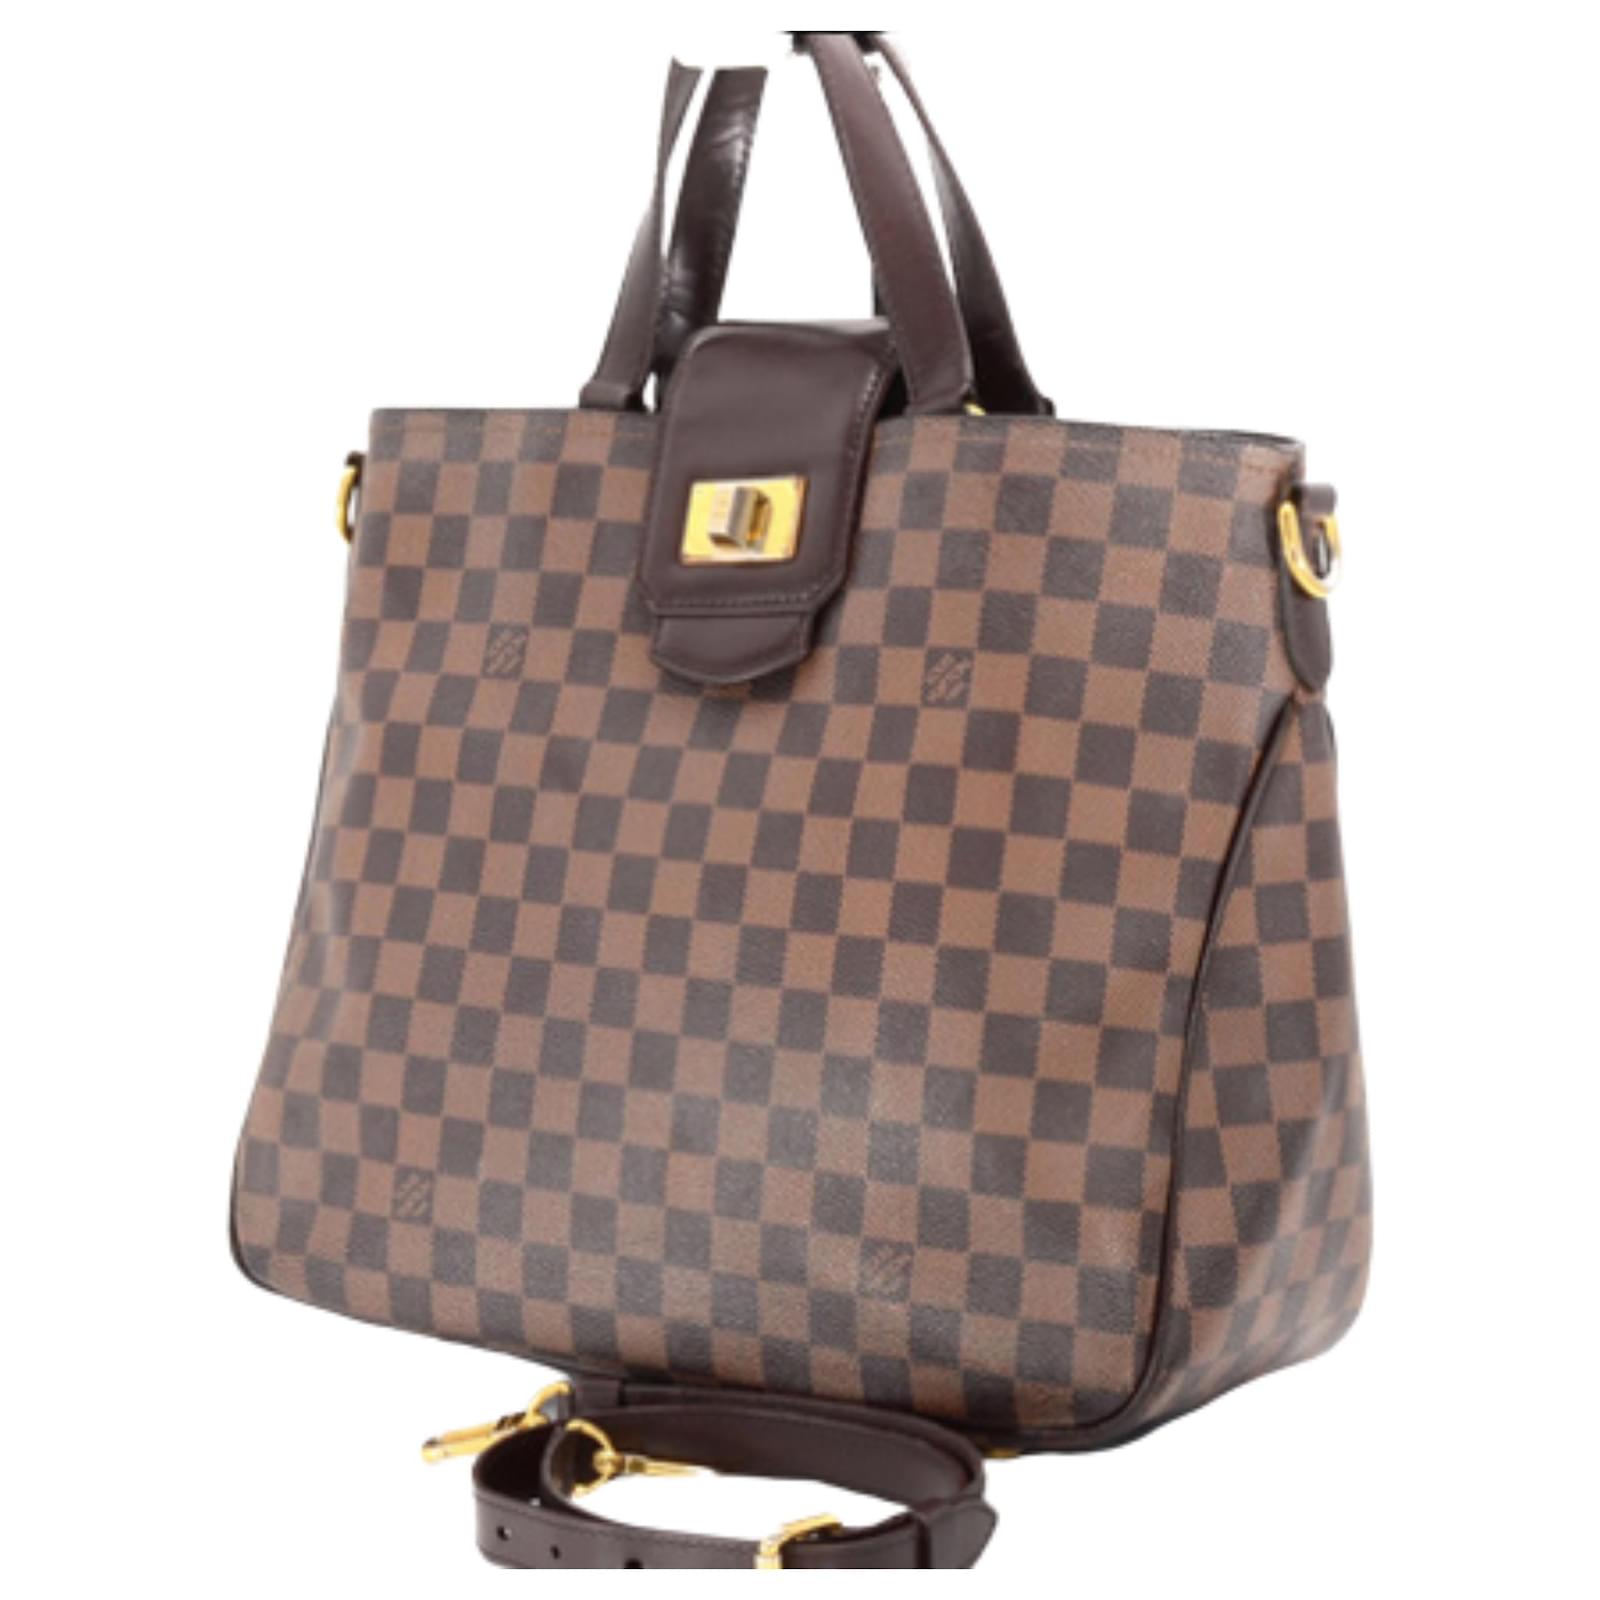 Louis Vuitton Cover Roseberry Handbag N41177 Damier Canvas Leather